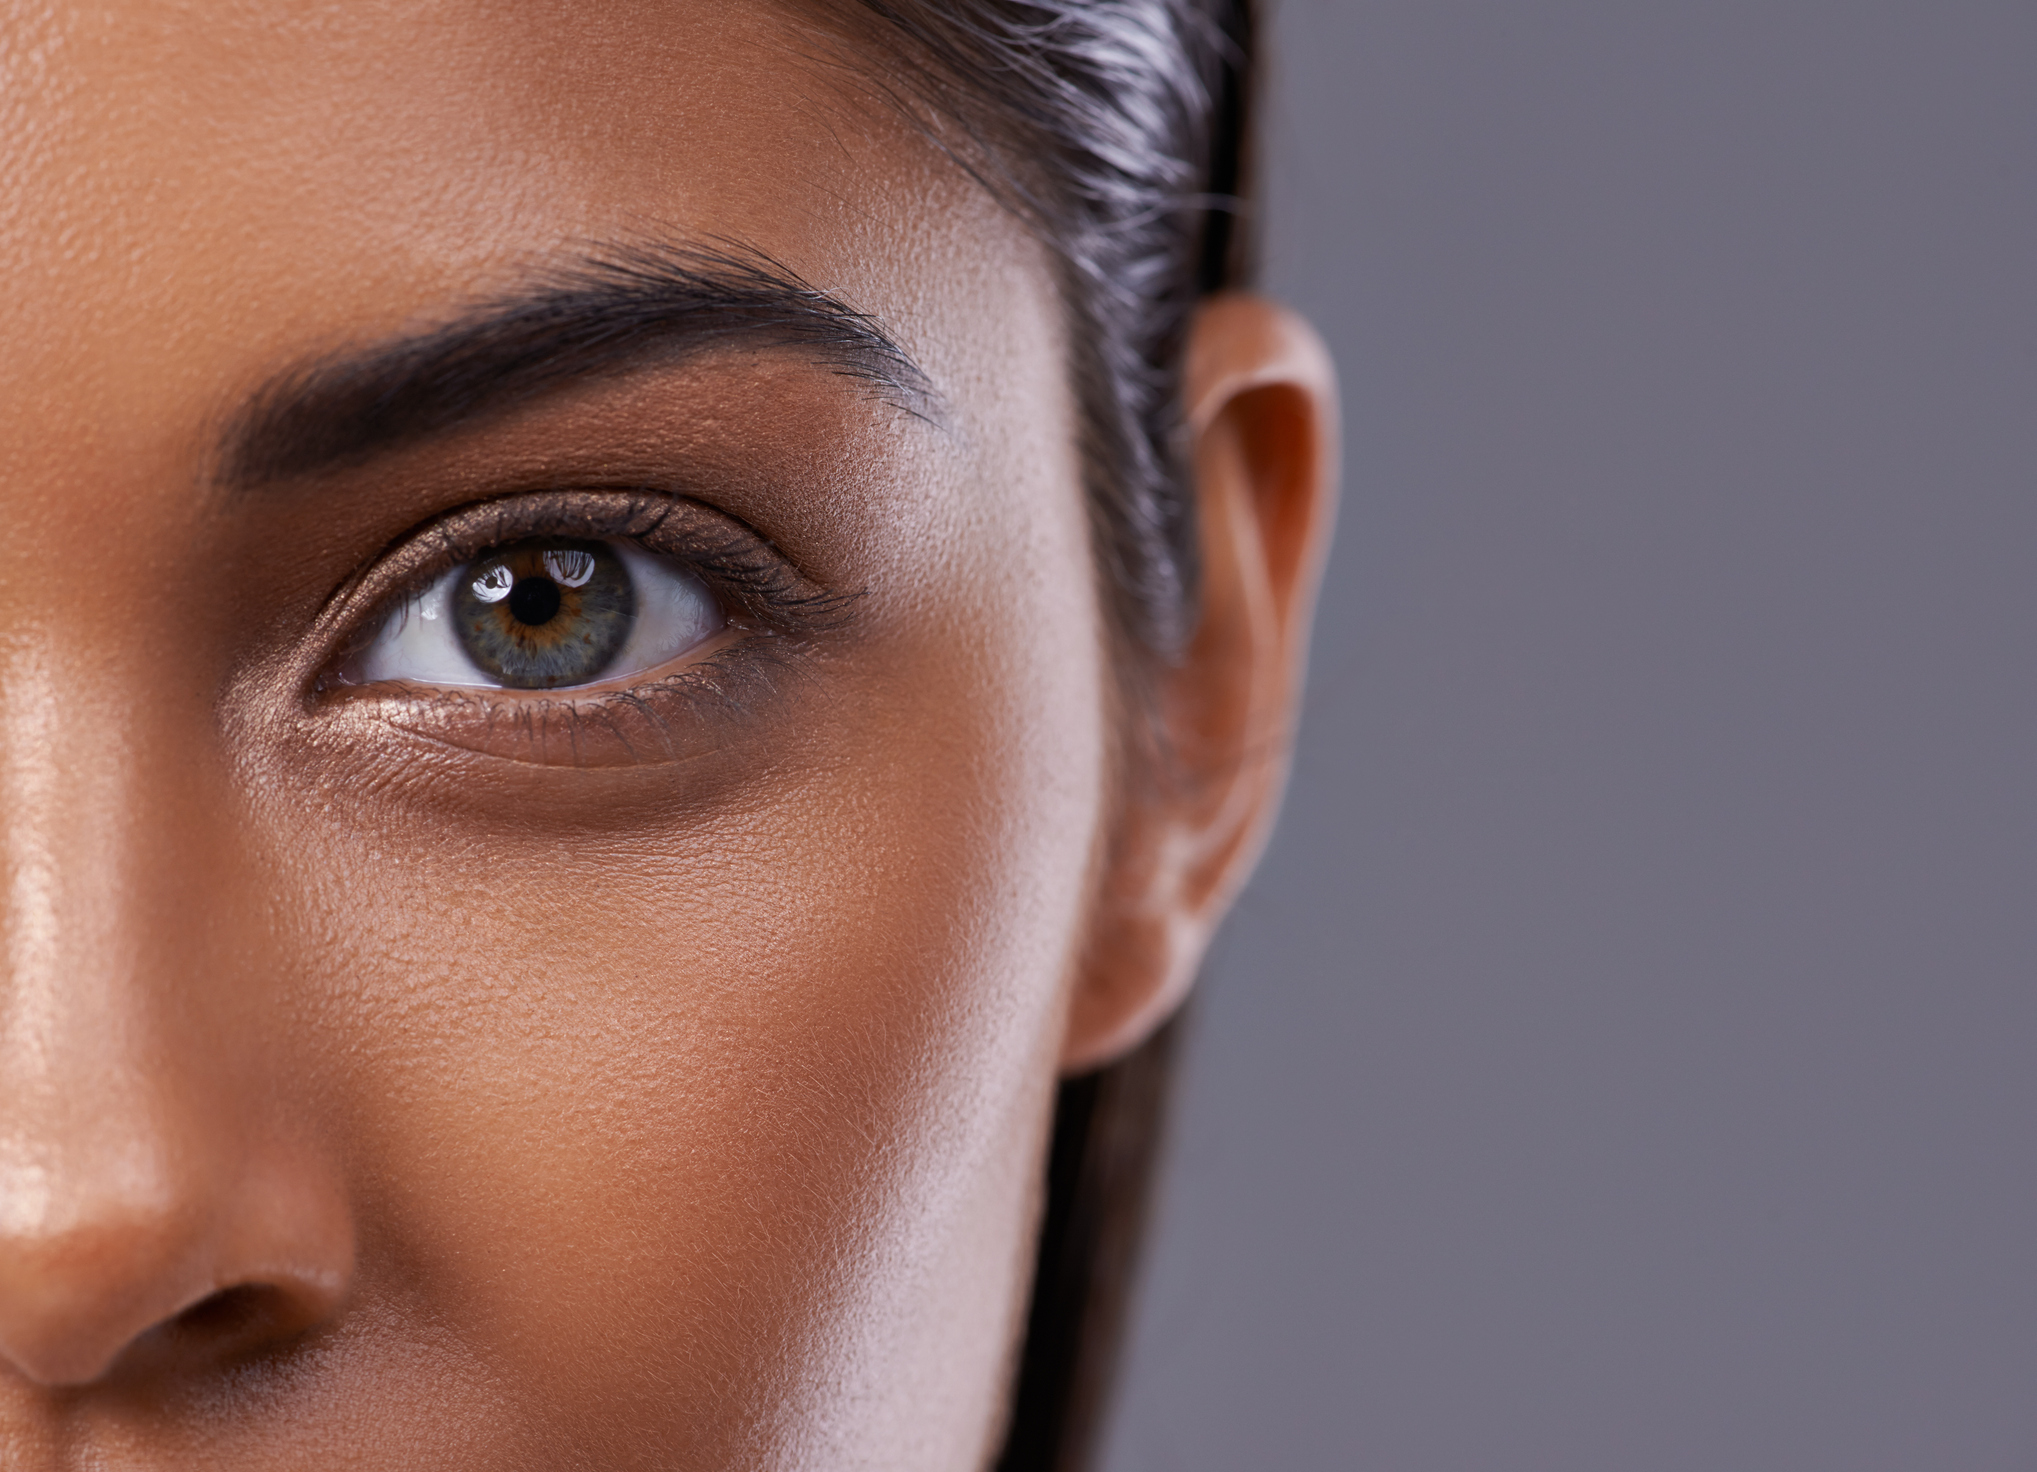 Bloom Facial Plastic Surgery Blog | Upper Eyelid Surgery vs Lower Eyelid Surgery: What's the Difference?